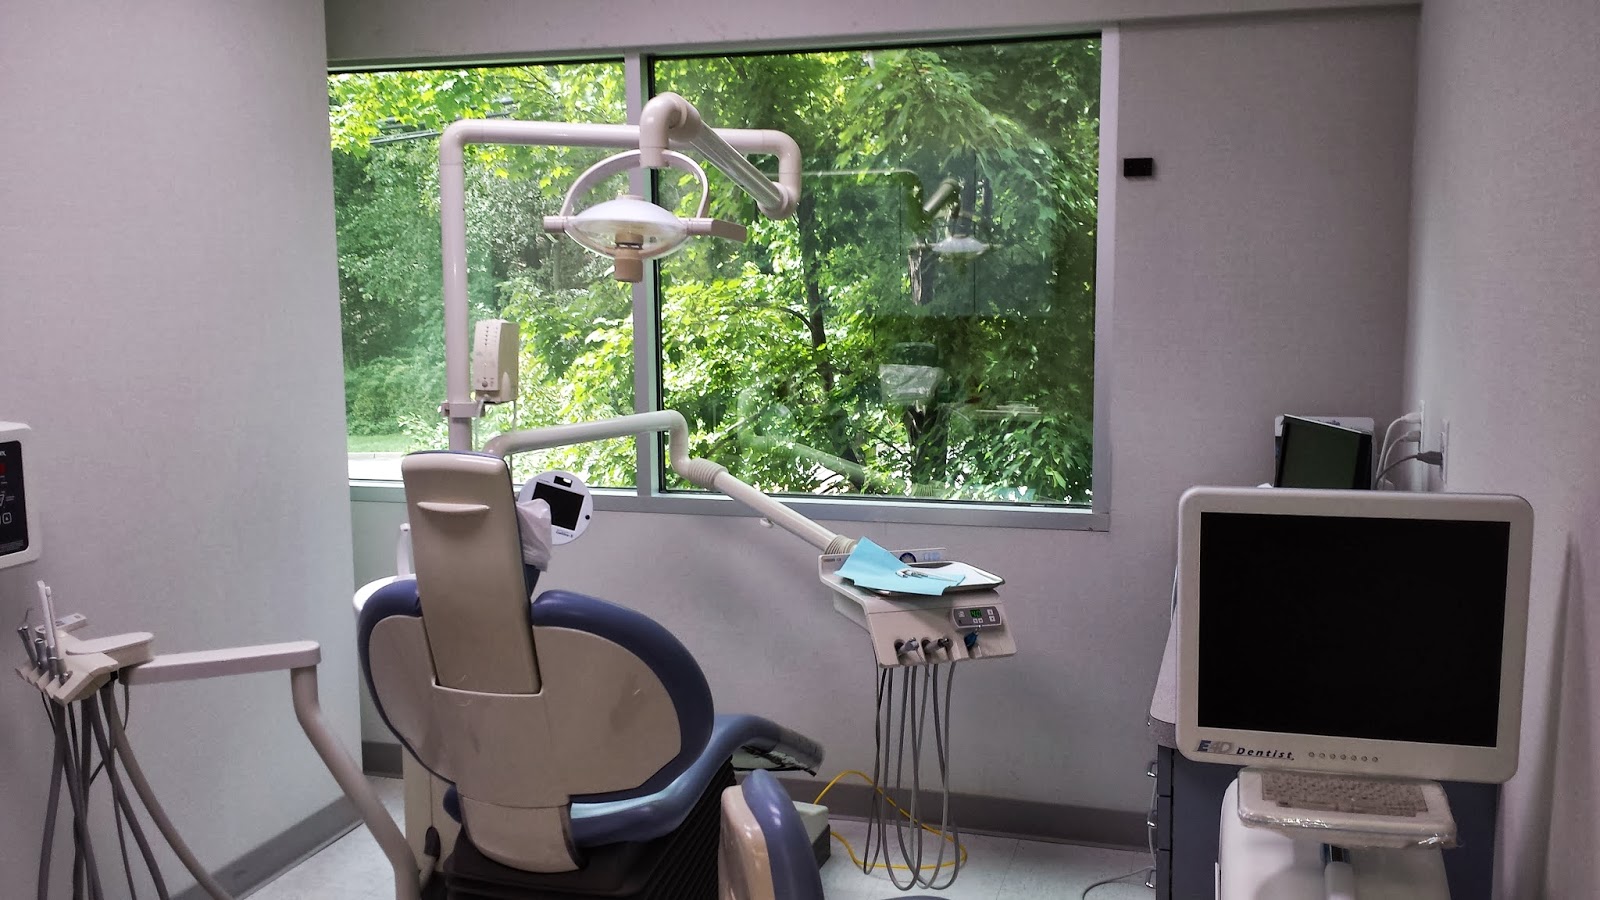 Photo of Dental Office of Paul R. Feldman, DMD in West Orange City, New Jersey, United States - 4 Picture of Point of interest, Establishment, Health, Dentist